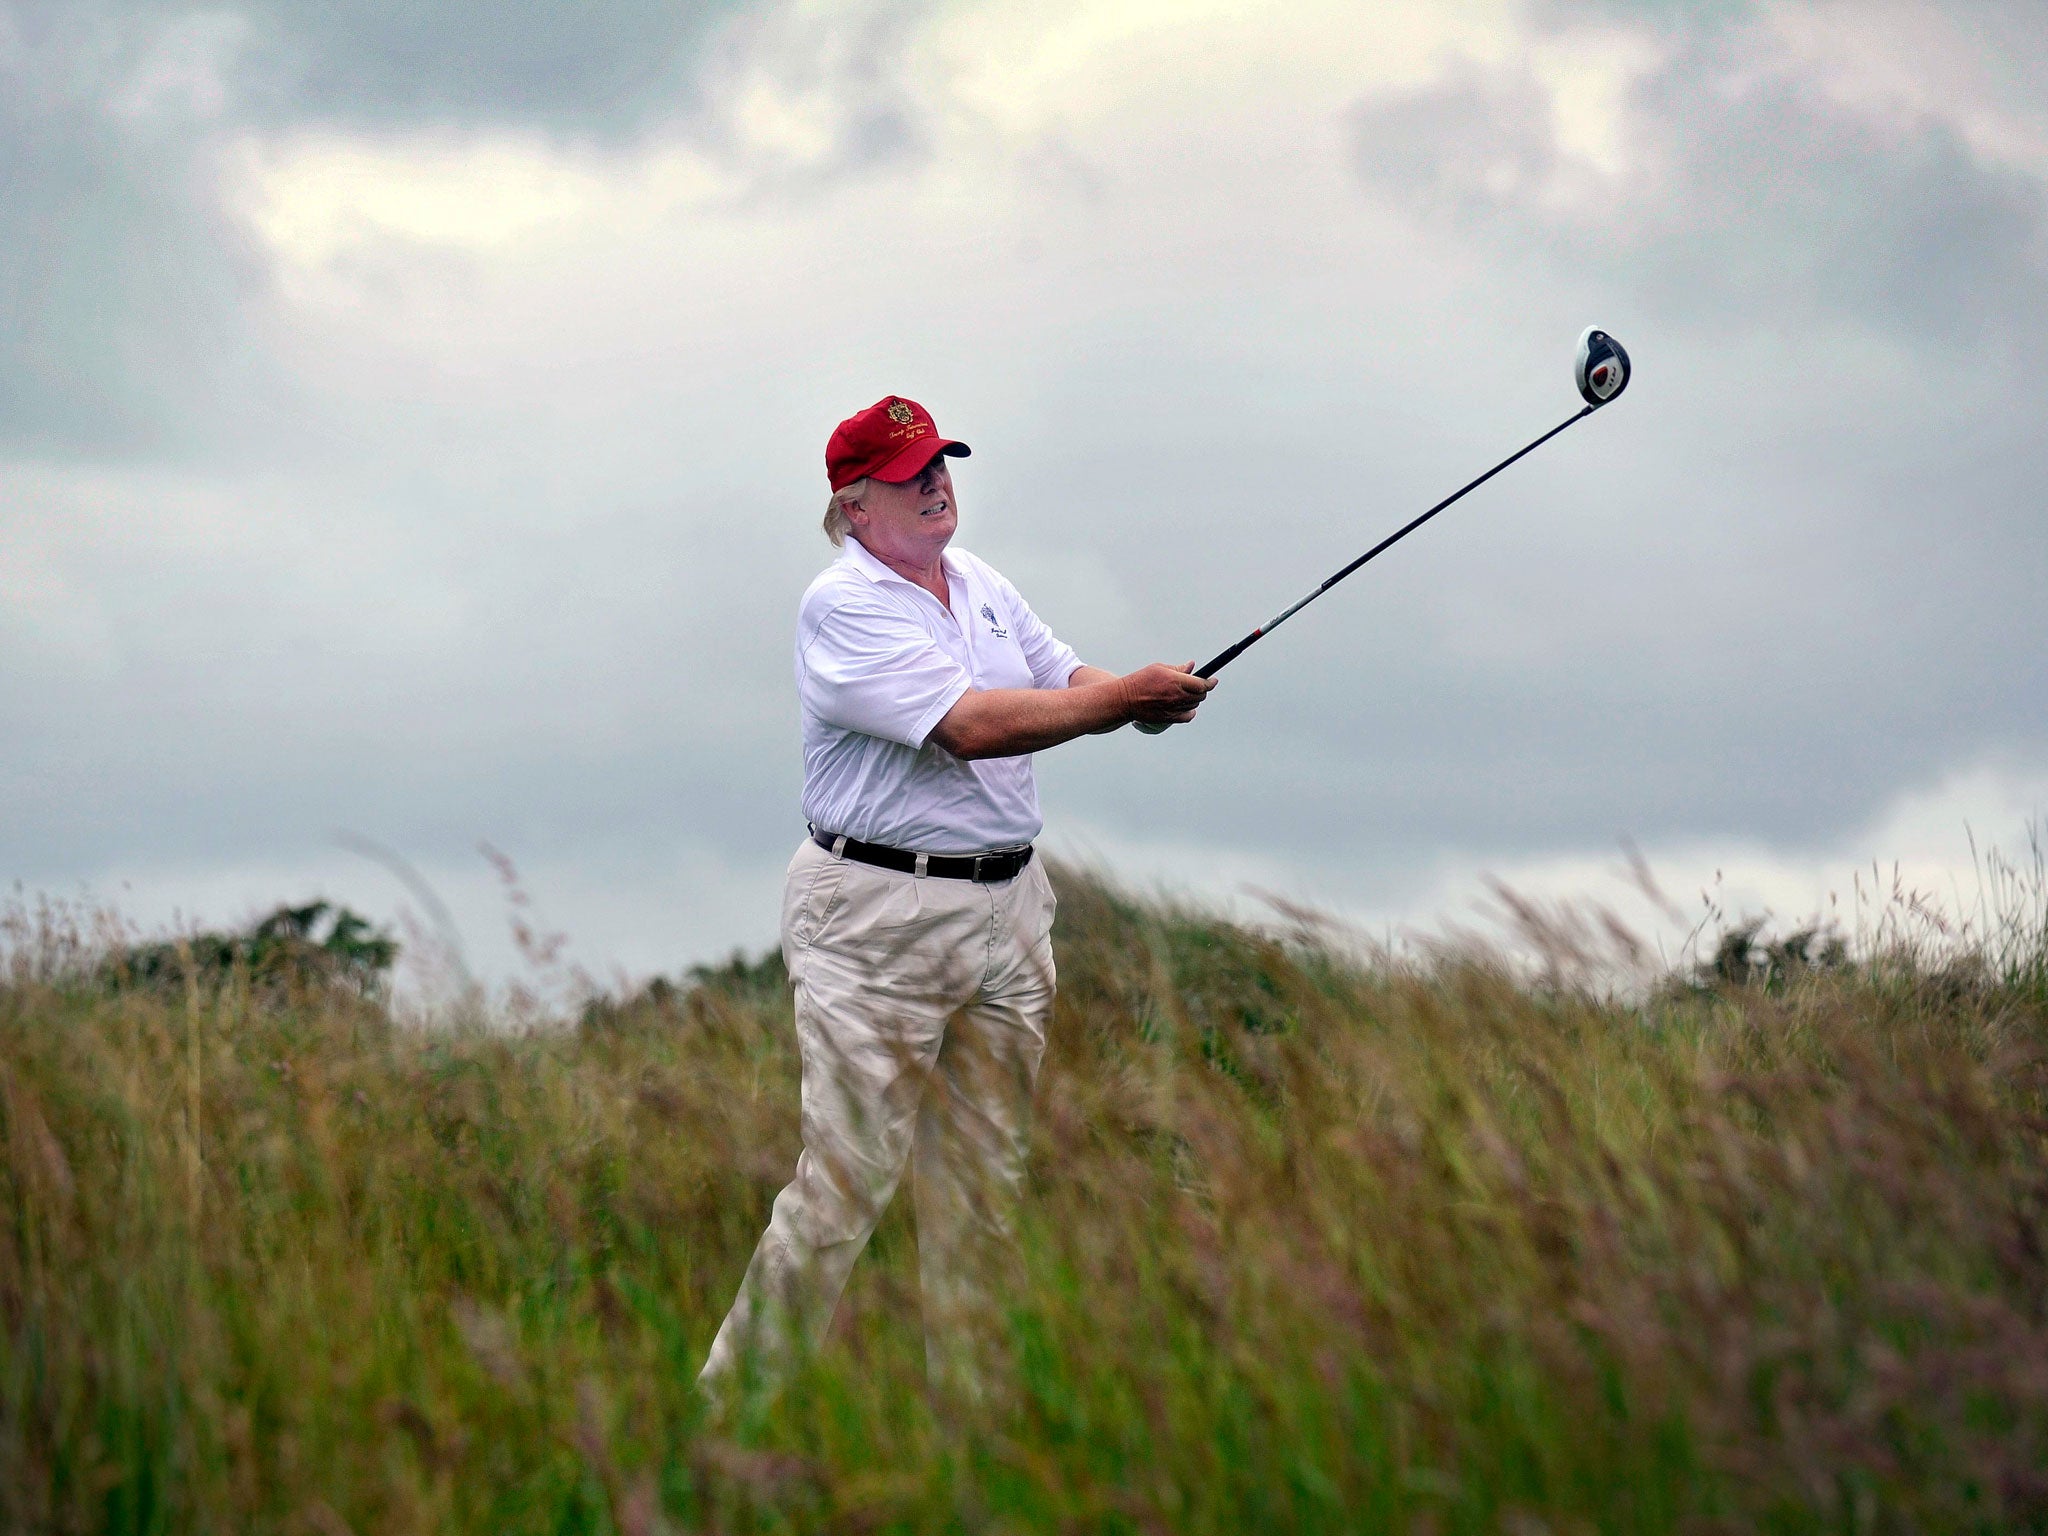 Donald Trump opened his £100 million Trump International golf resort in 2012